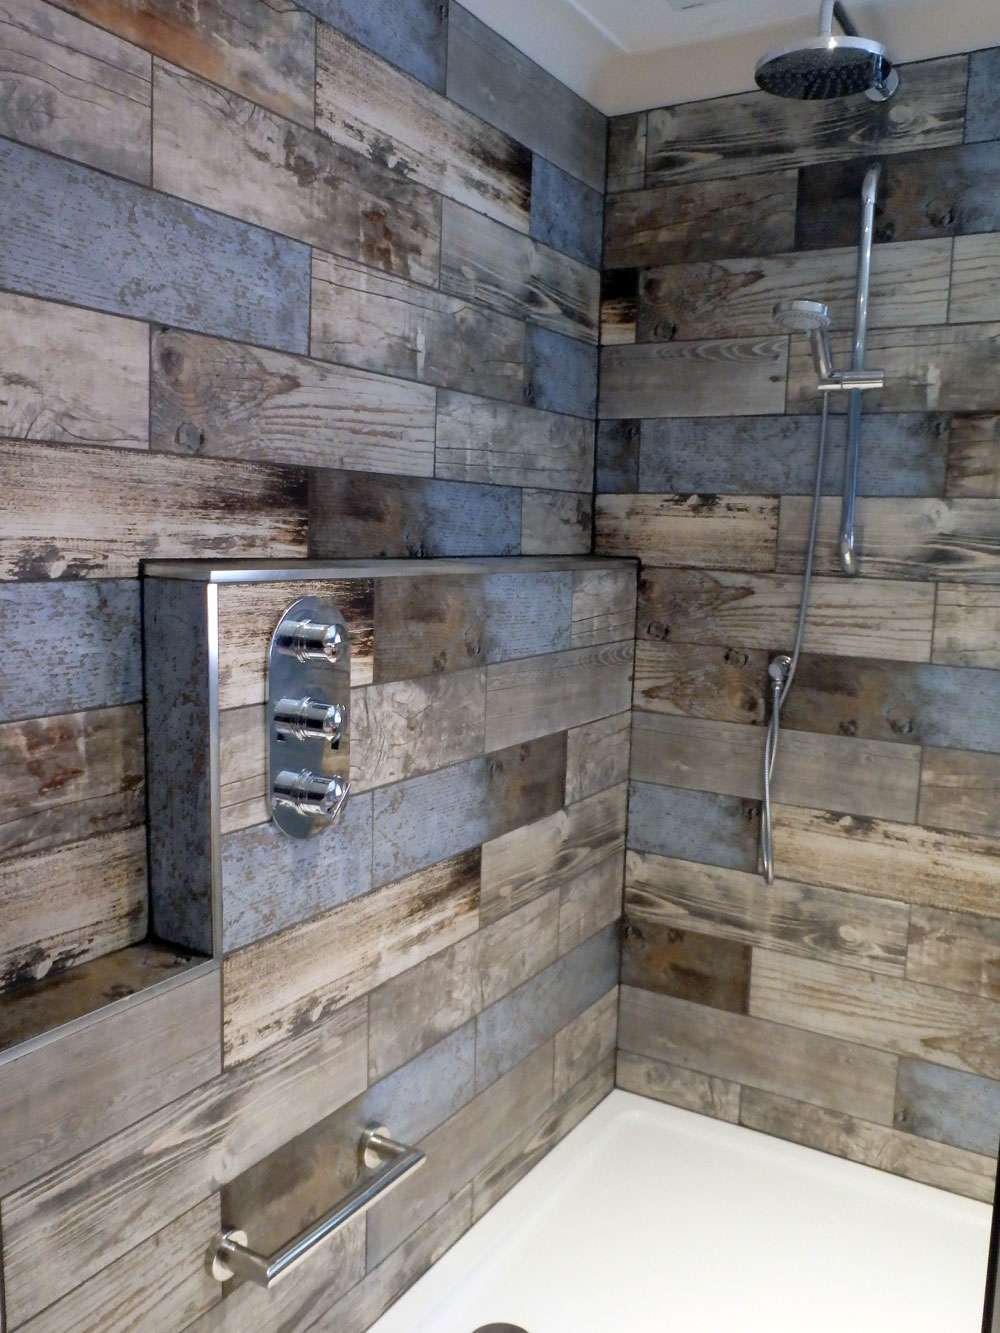 wood effect tiles in shower area